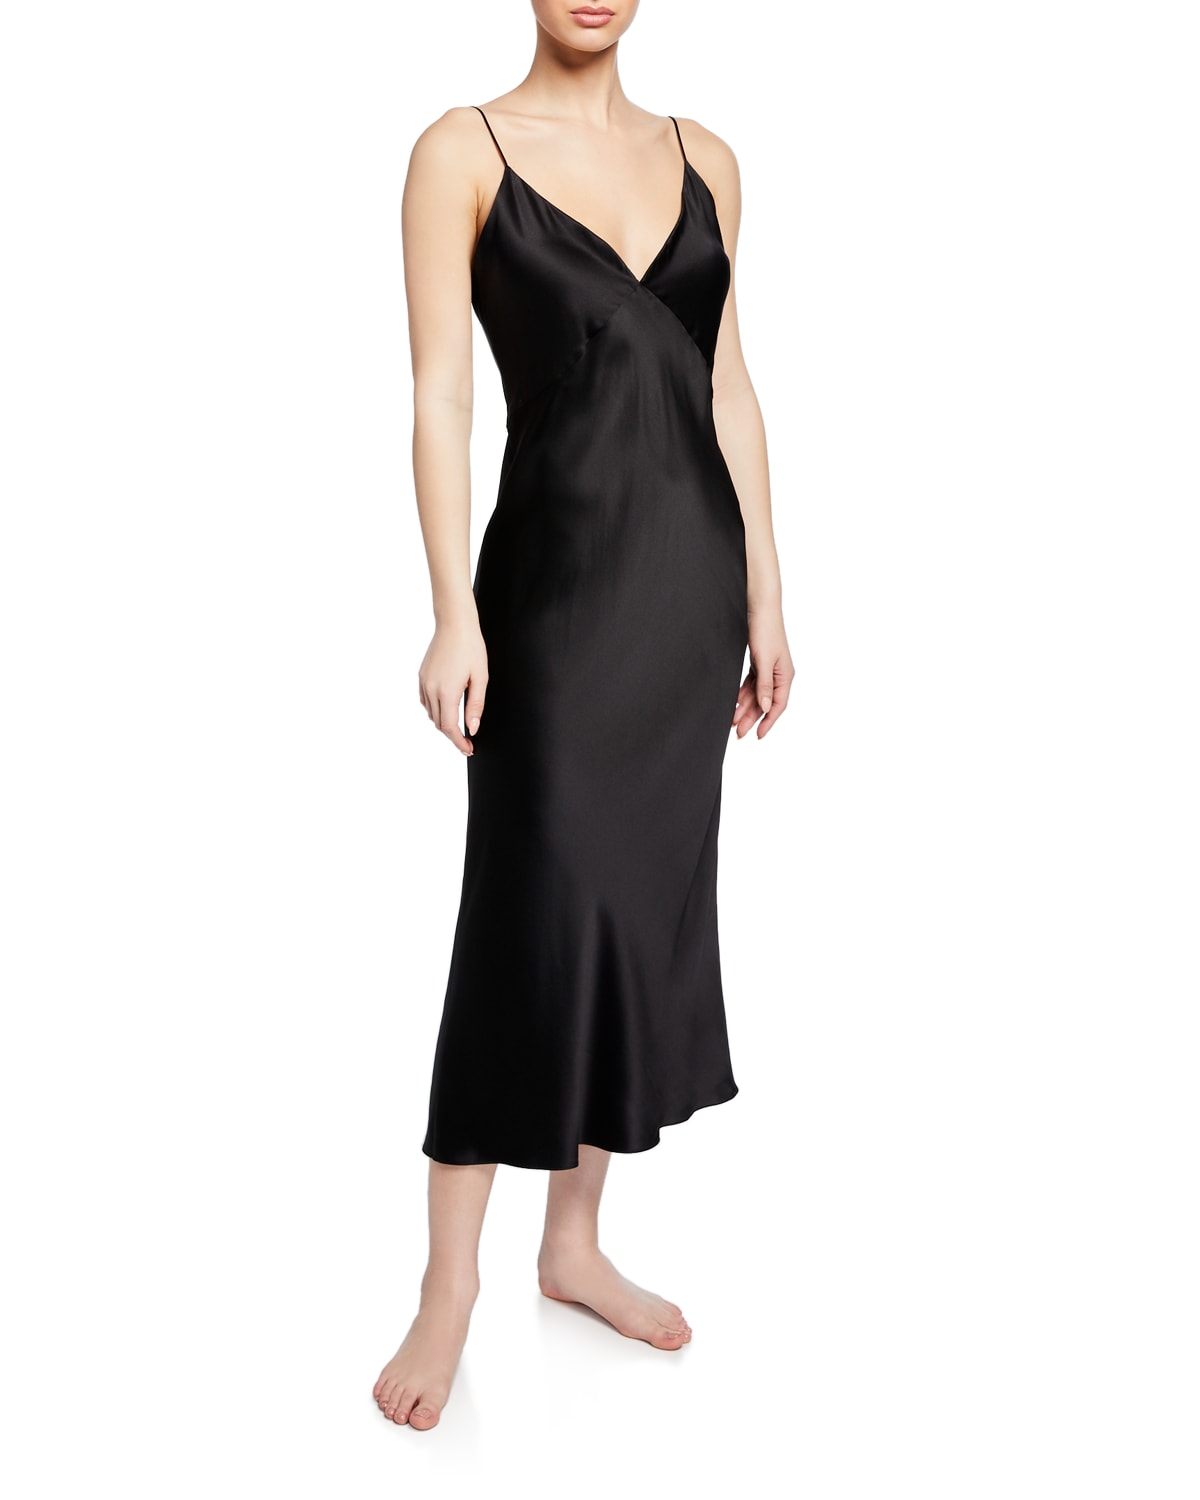 Issa Jet Black Silk Slip Dress Styled As Night Or Evening Wear